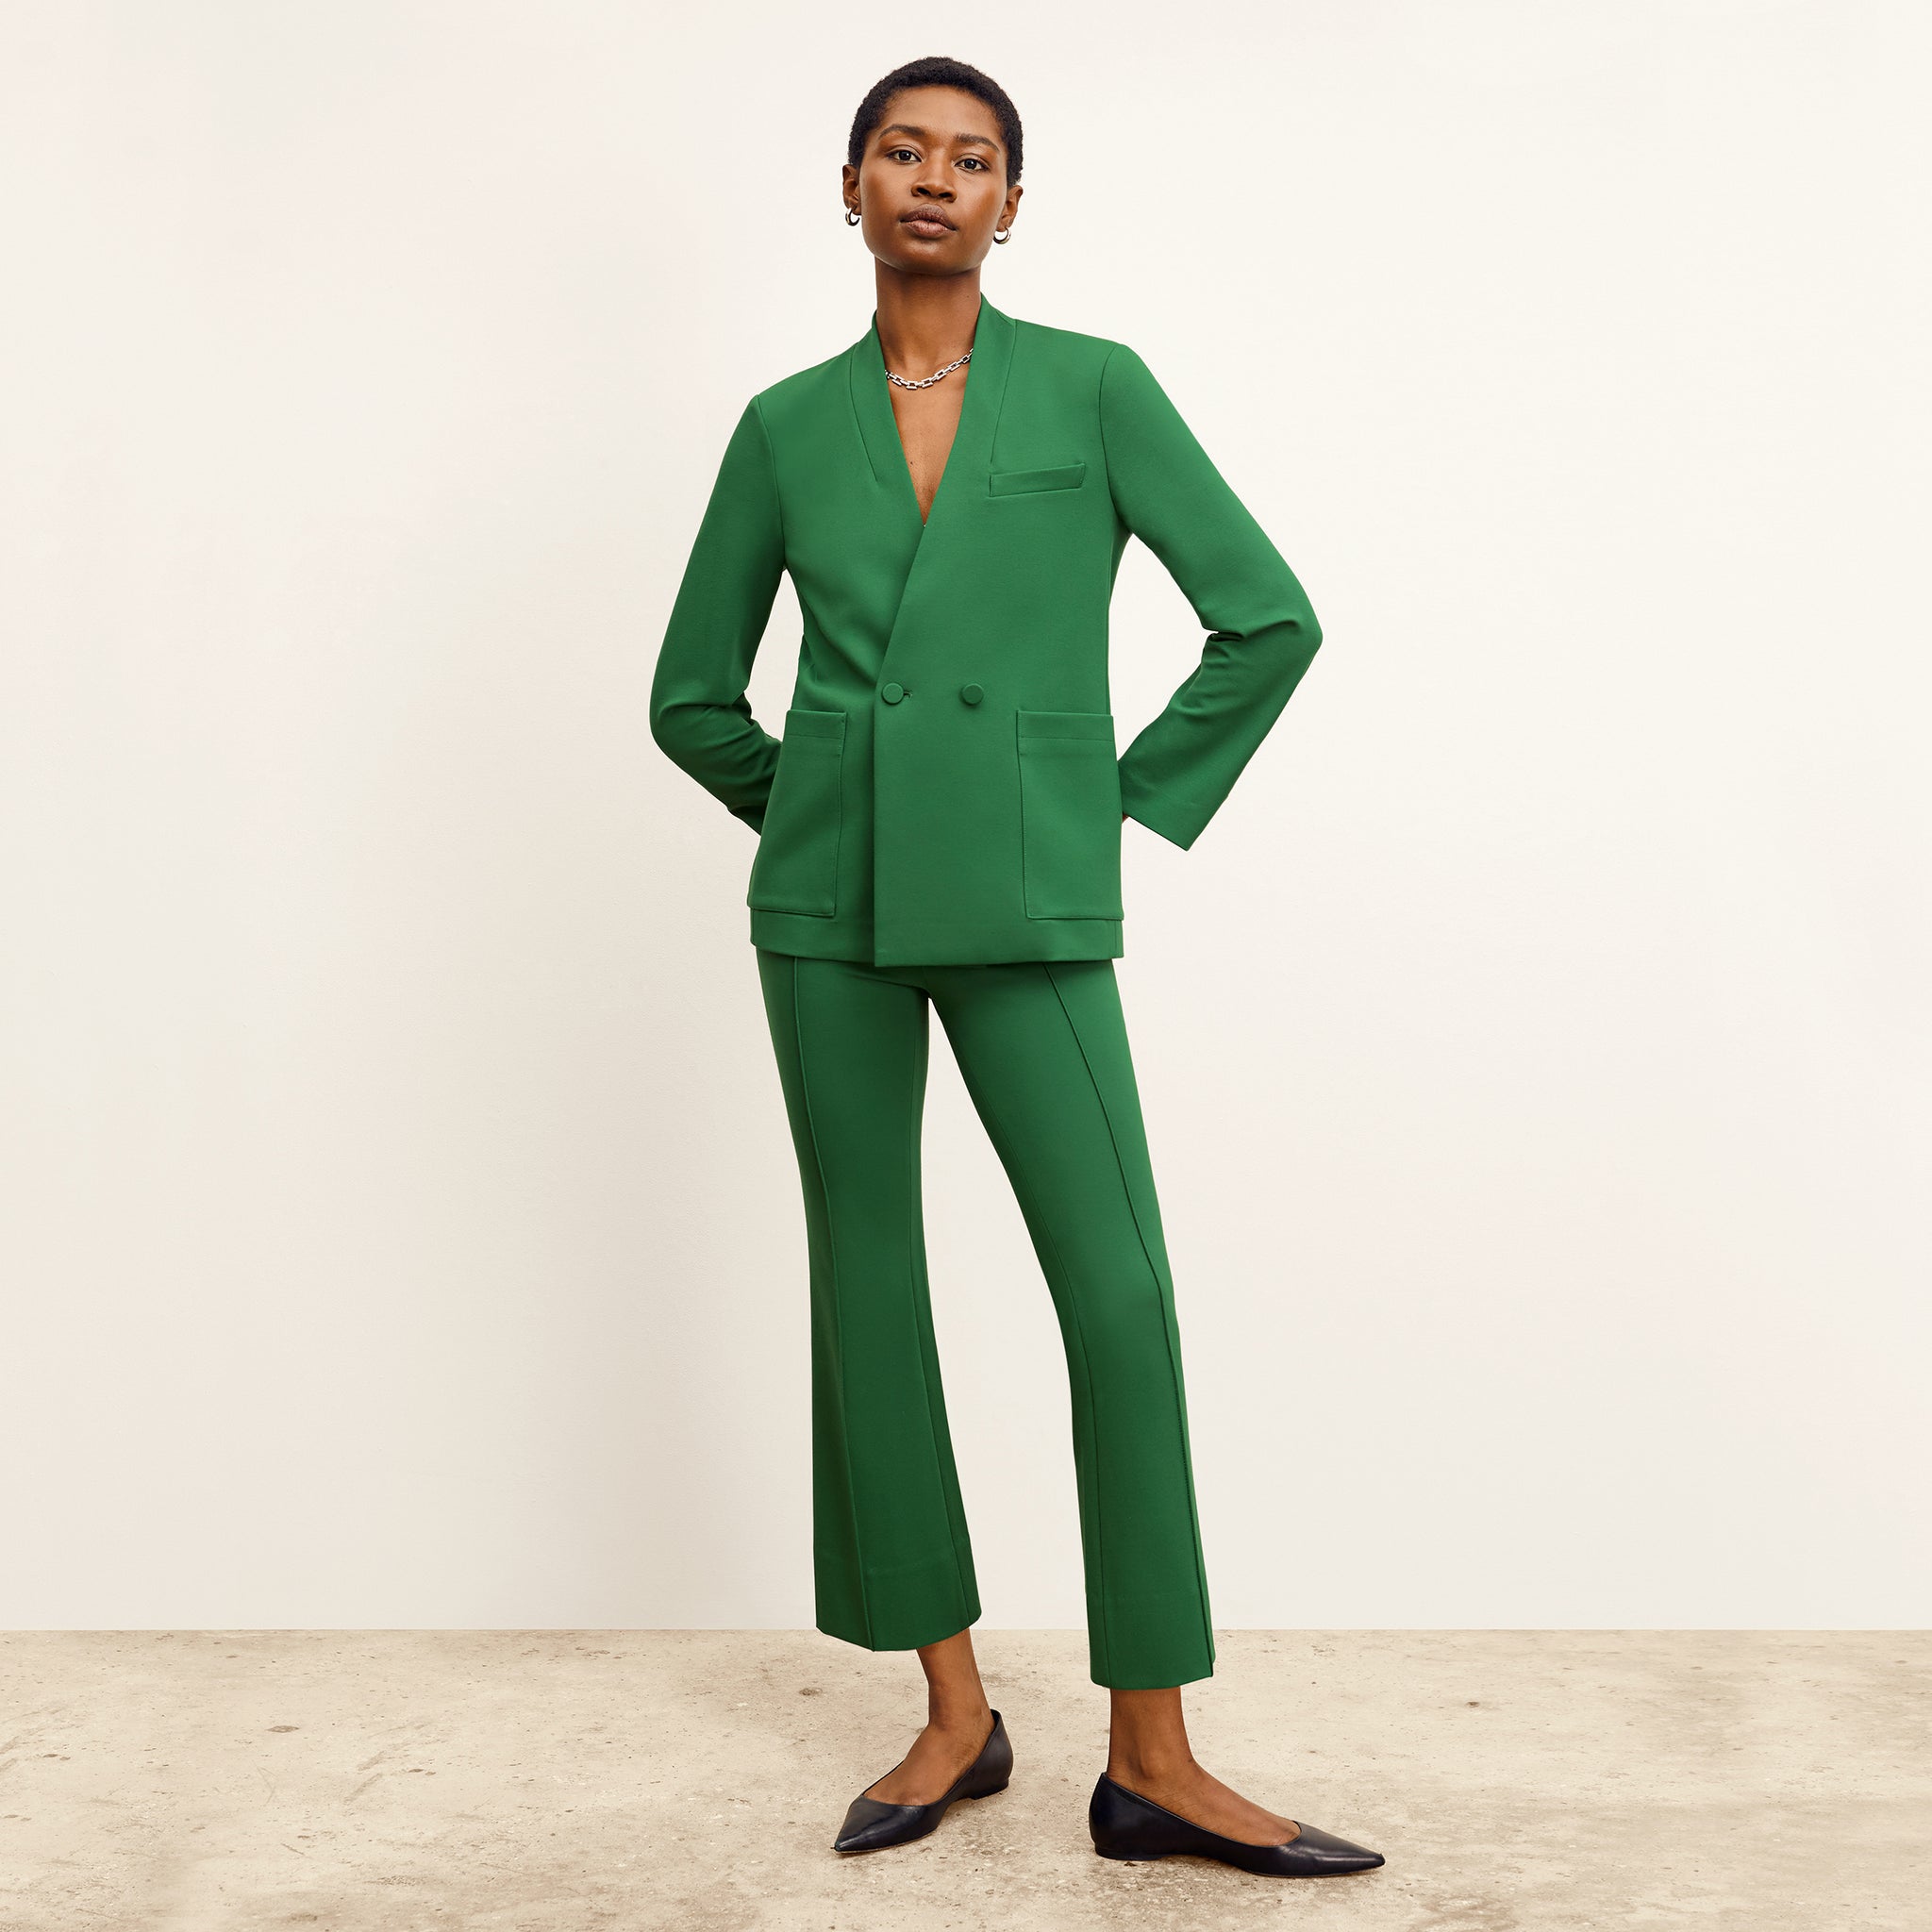 ThreadUp Outfit: Zara Leopard Print Pants + J.Crew Bright Green